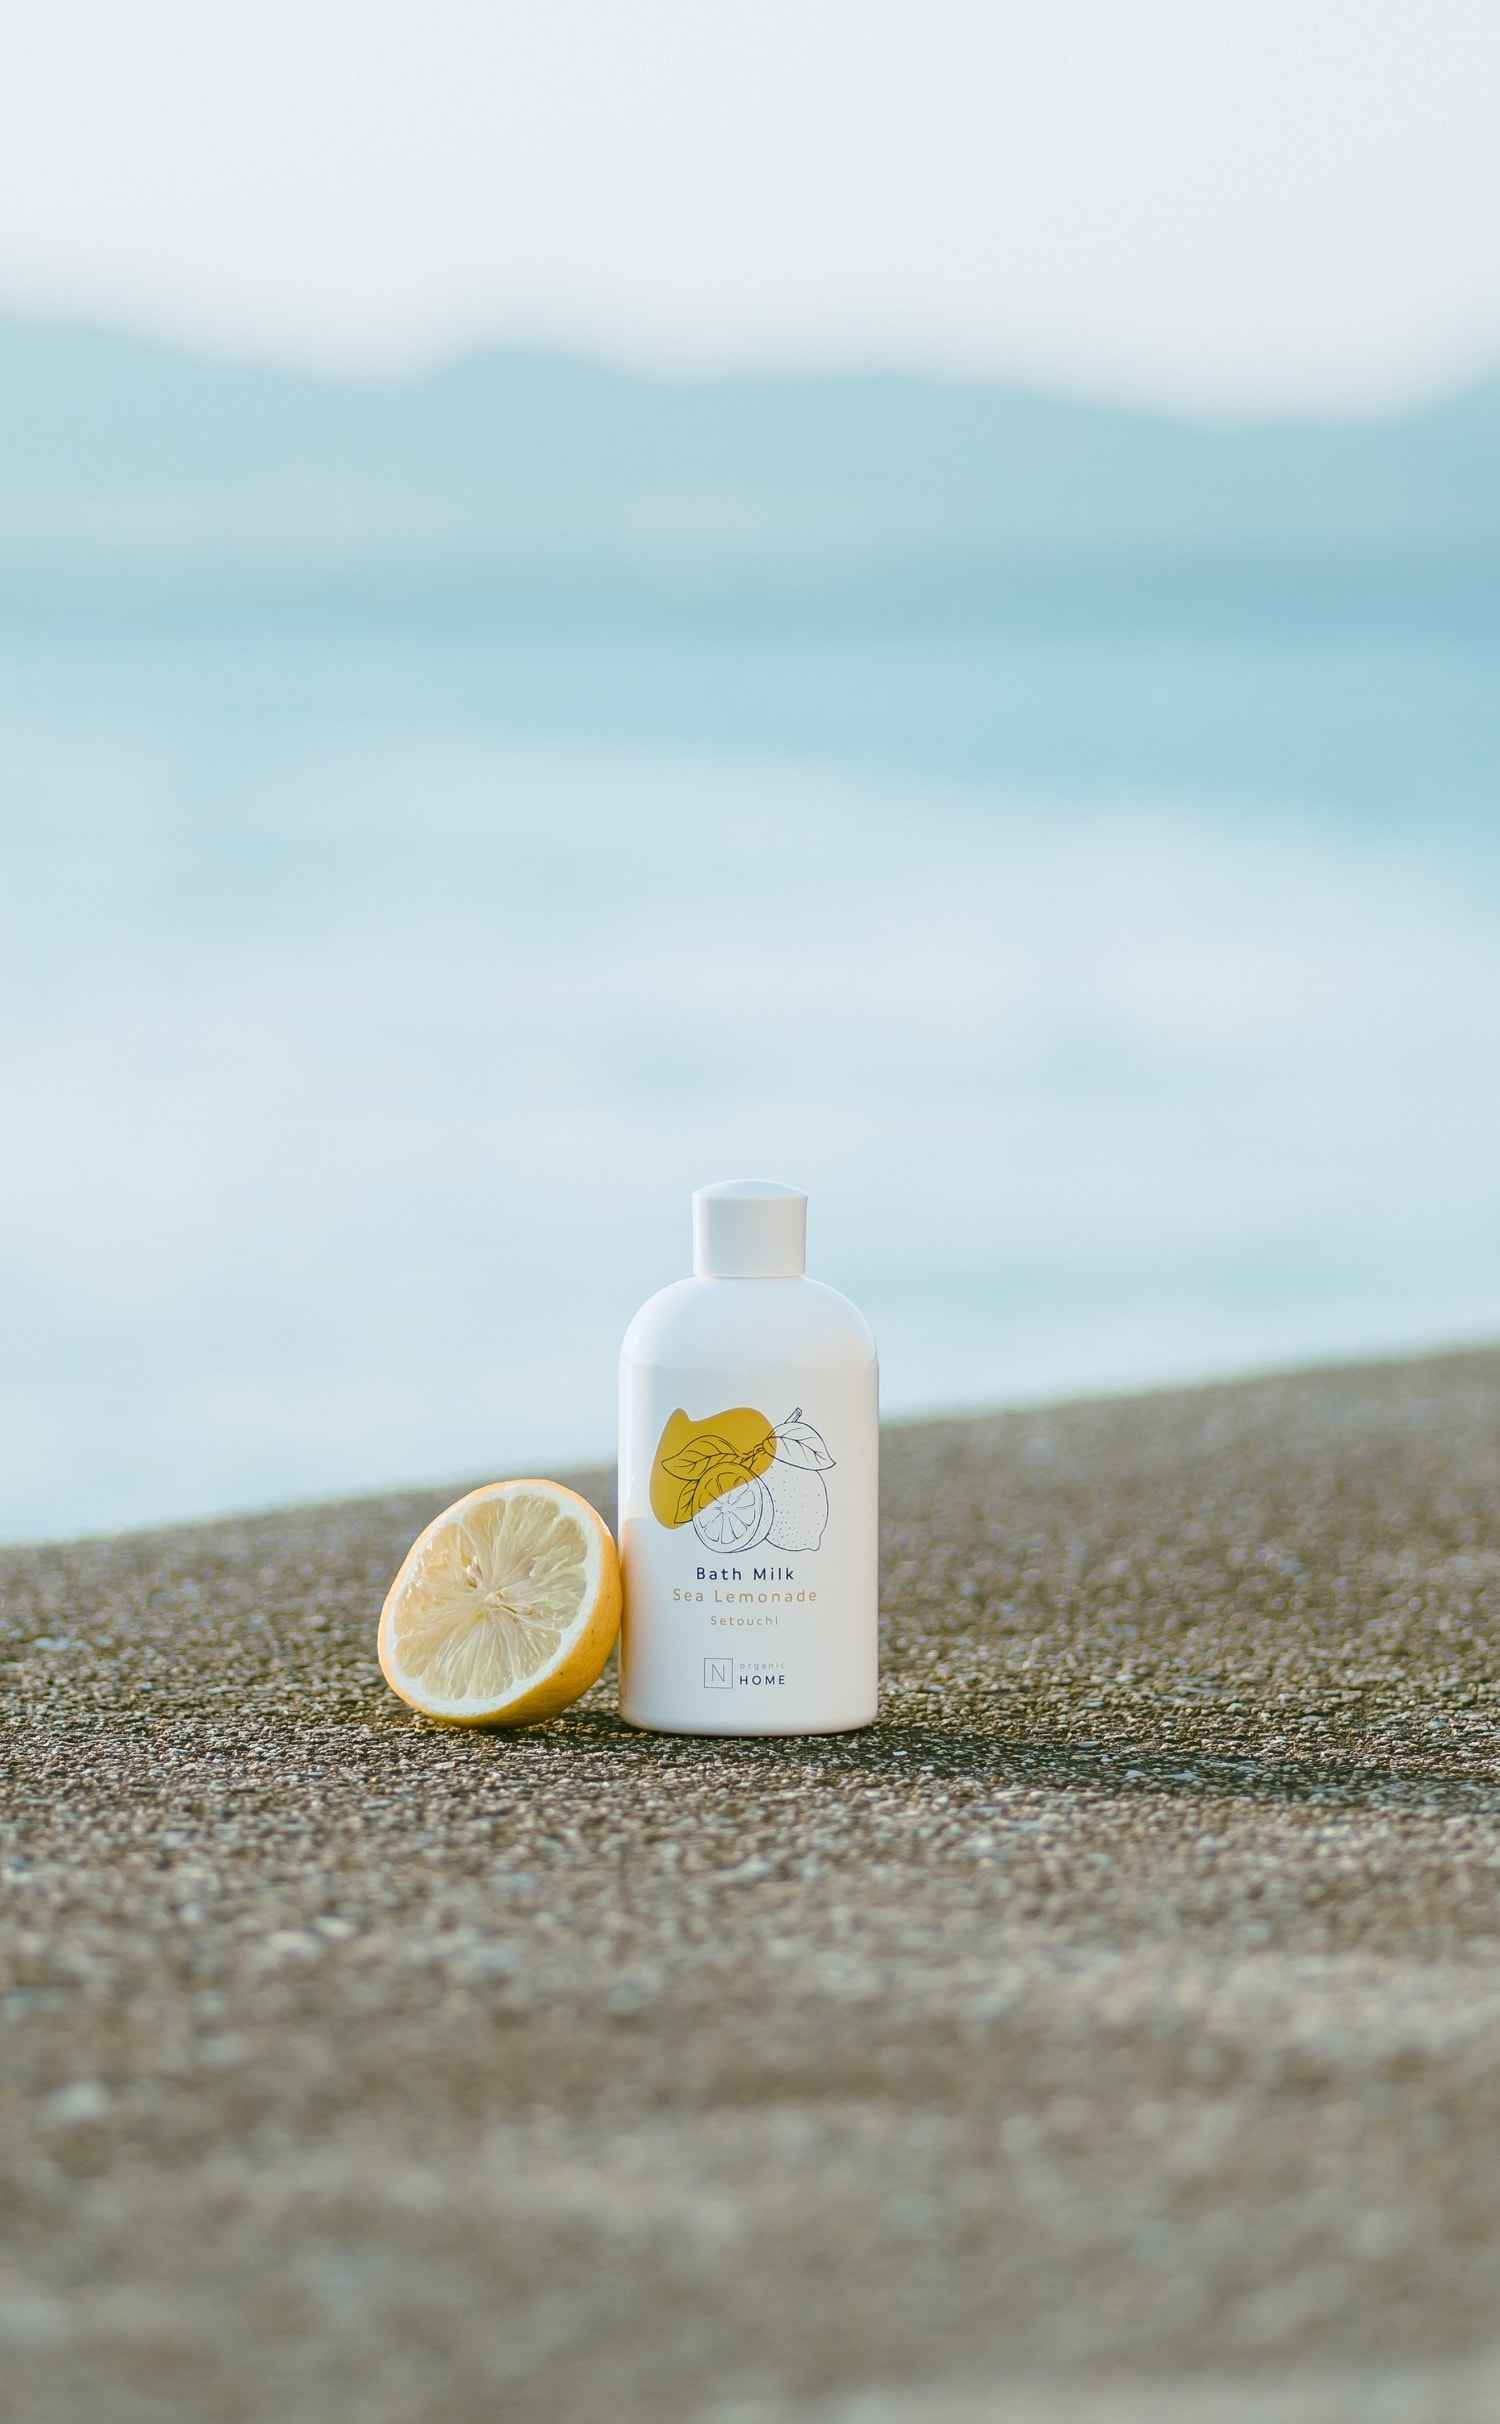 N organic Bath MilkのSea Lemonadeの商品を瀬戸内の海の背景で飾った写真